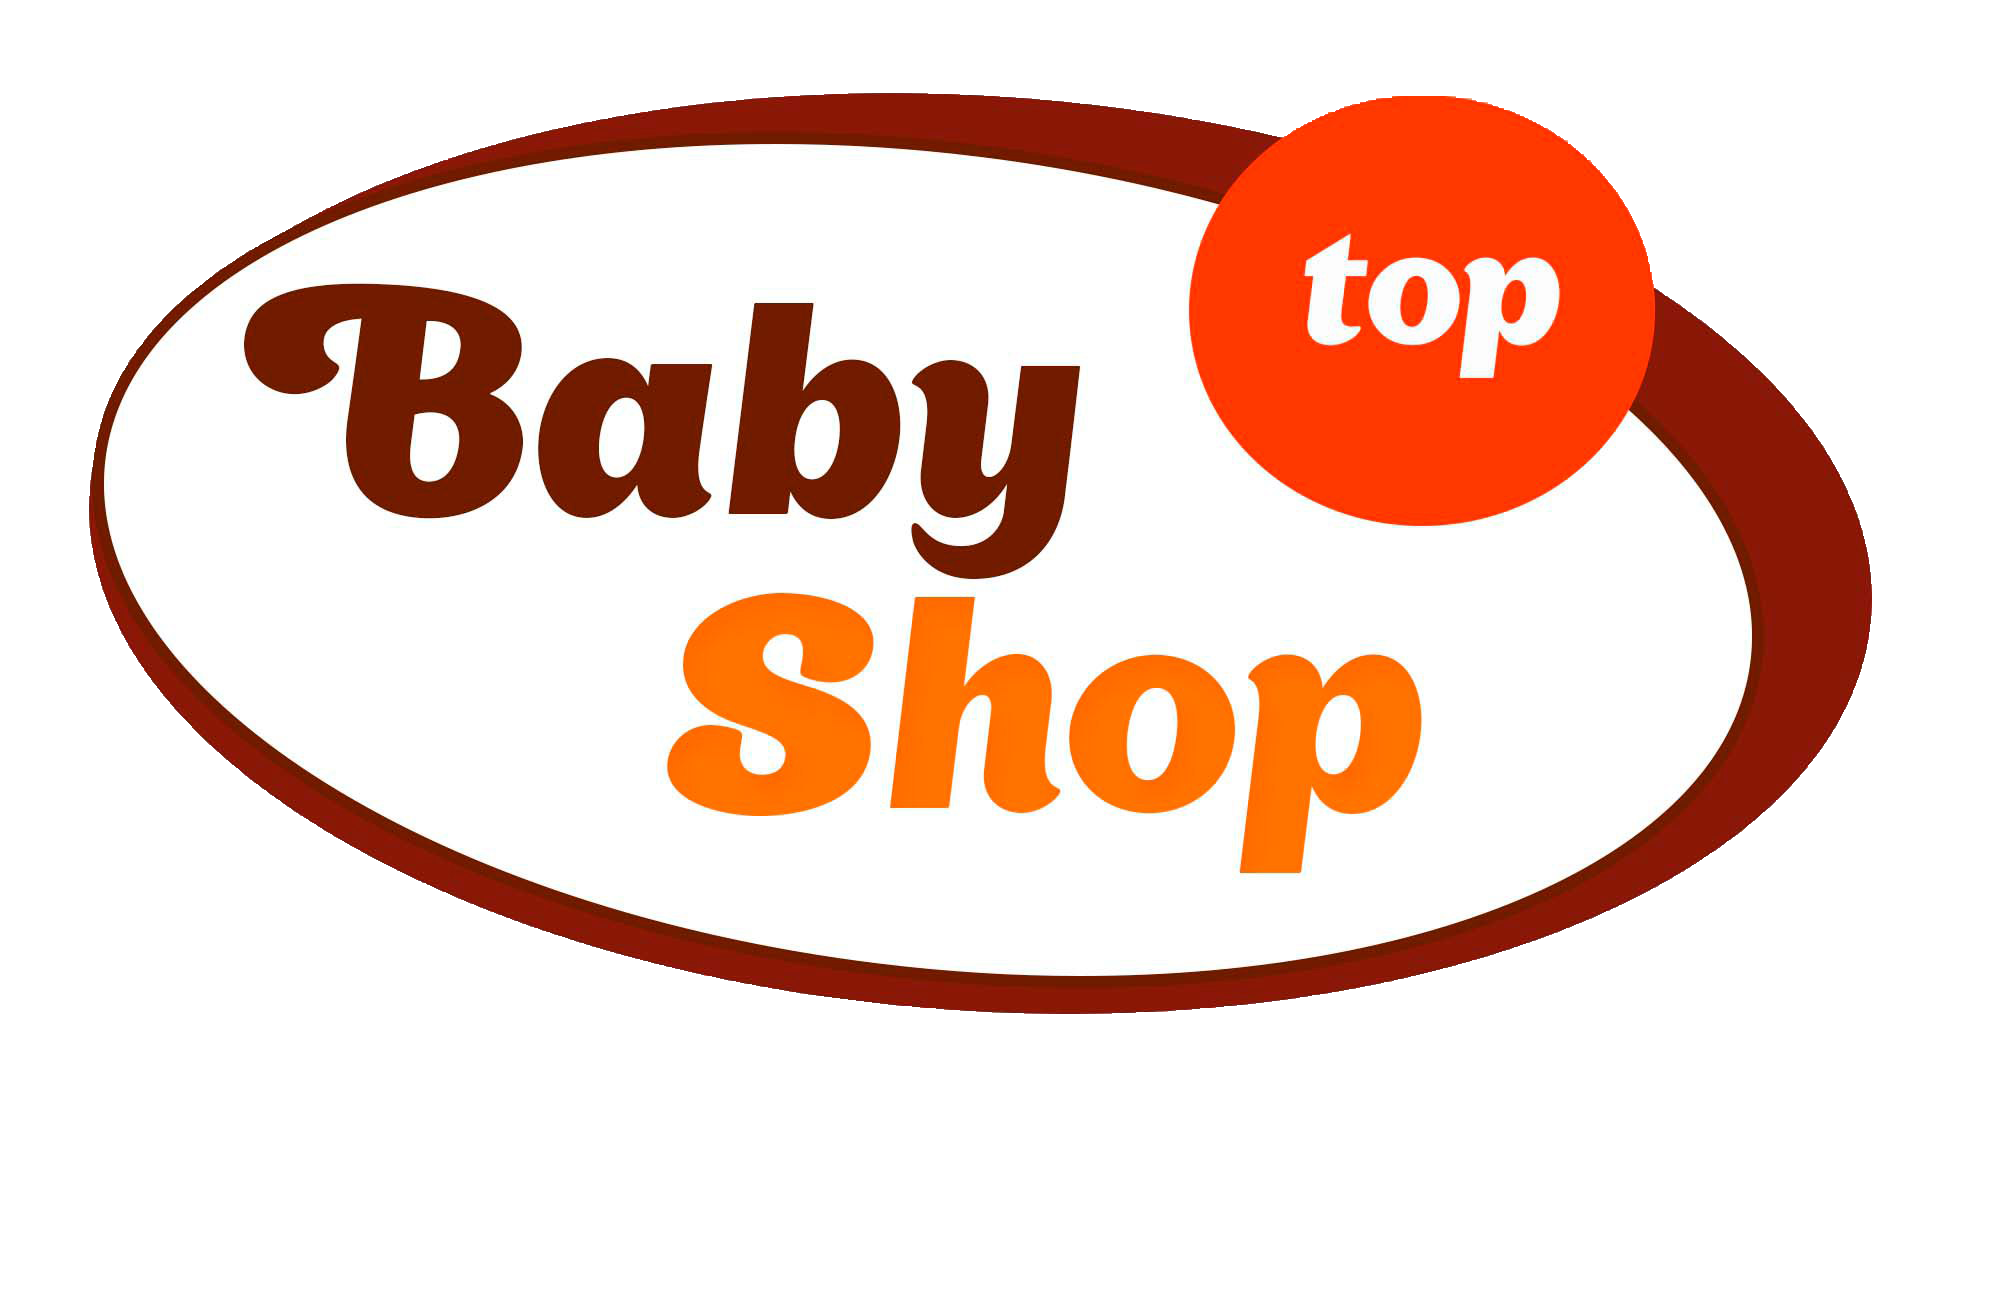 Беби шоп. Babyshop лого. Babyshop магазин детский. Логотип Беби шоп. Бэйби baby